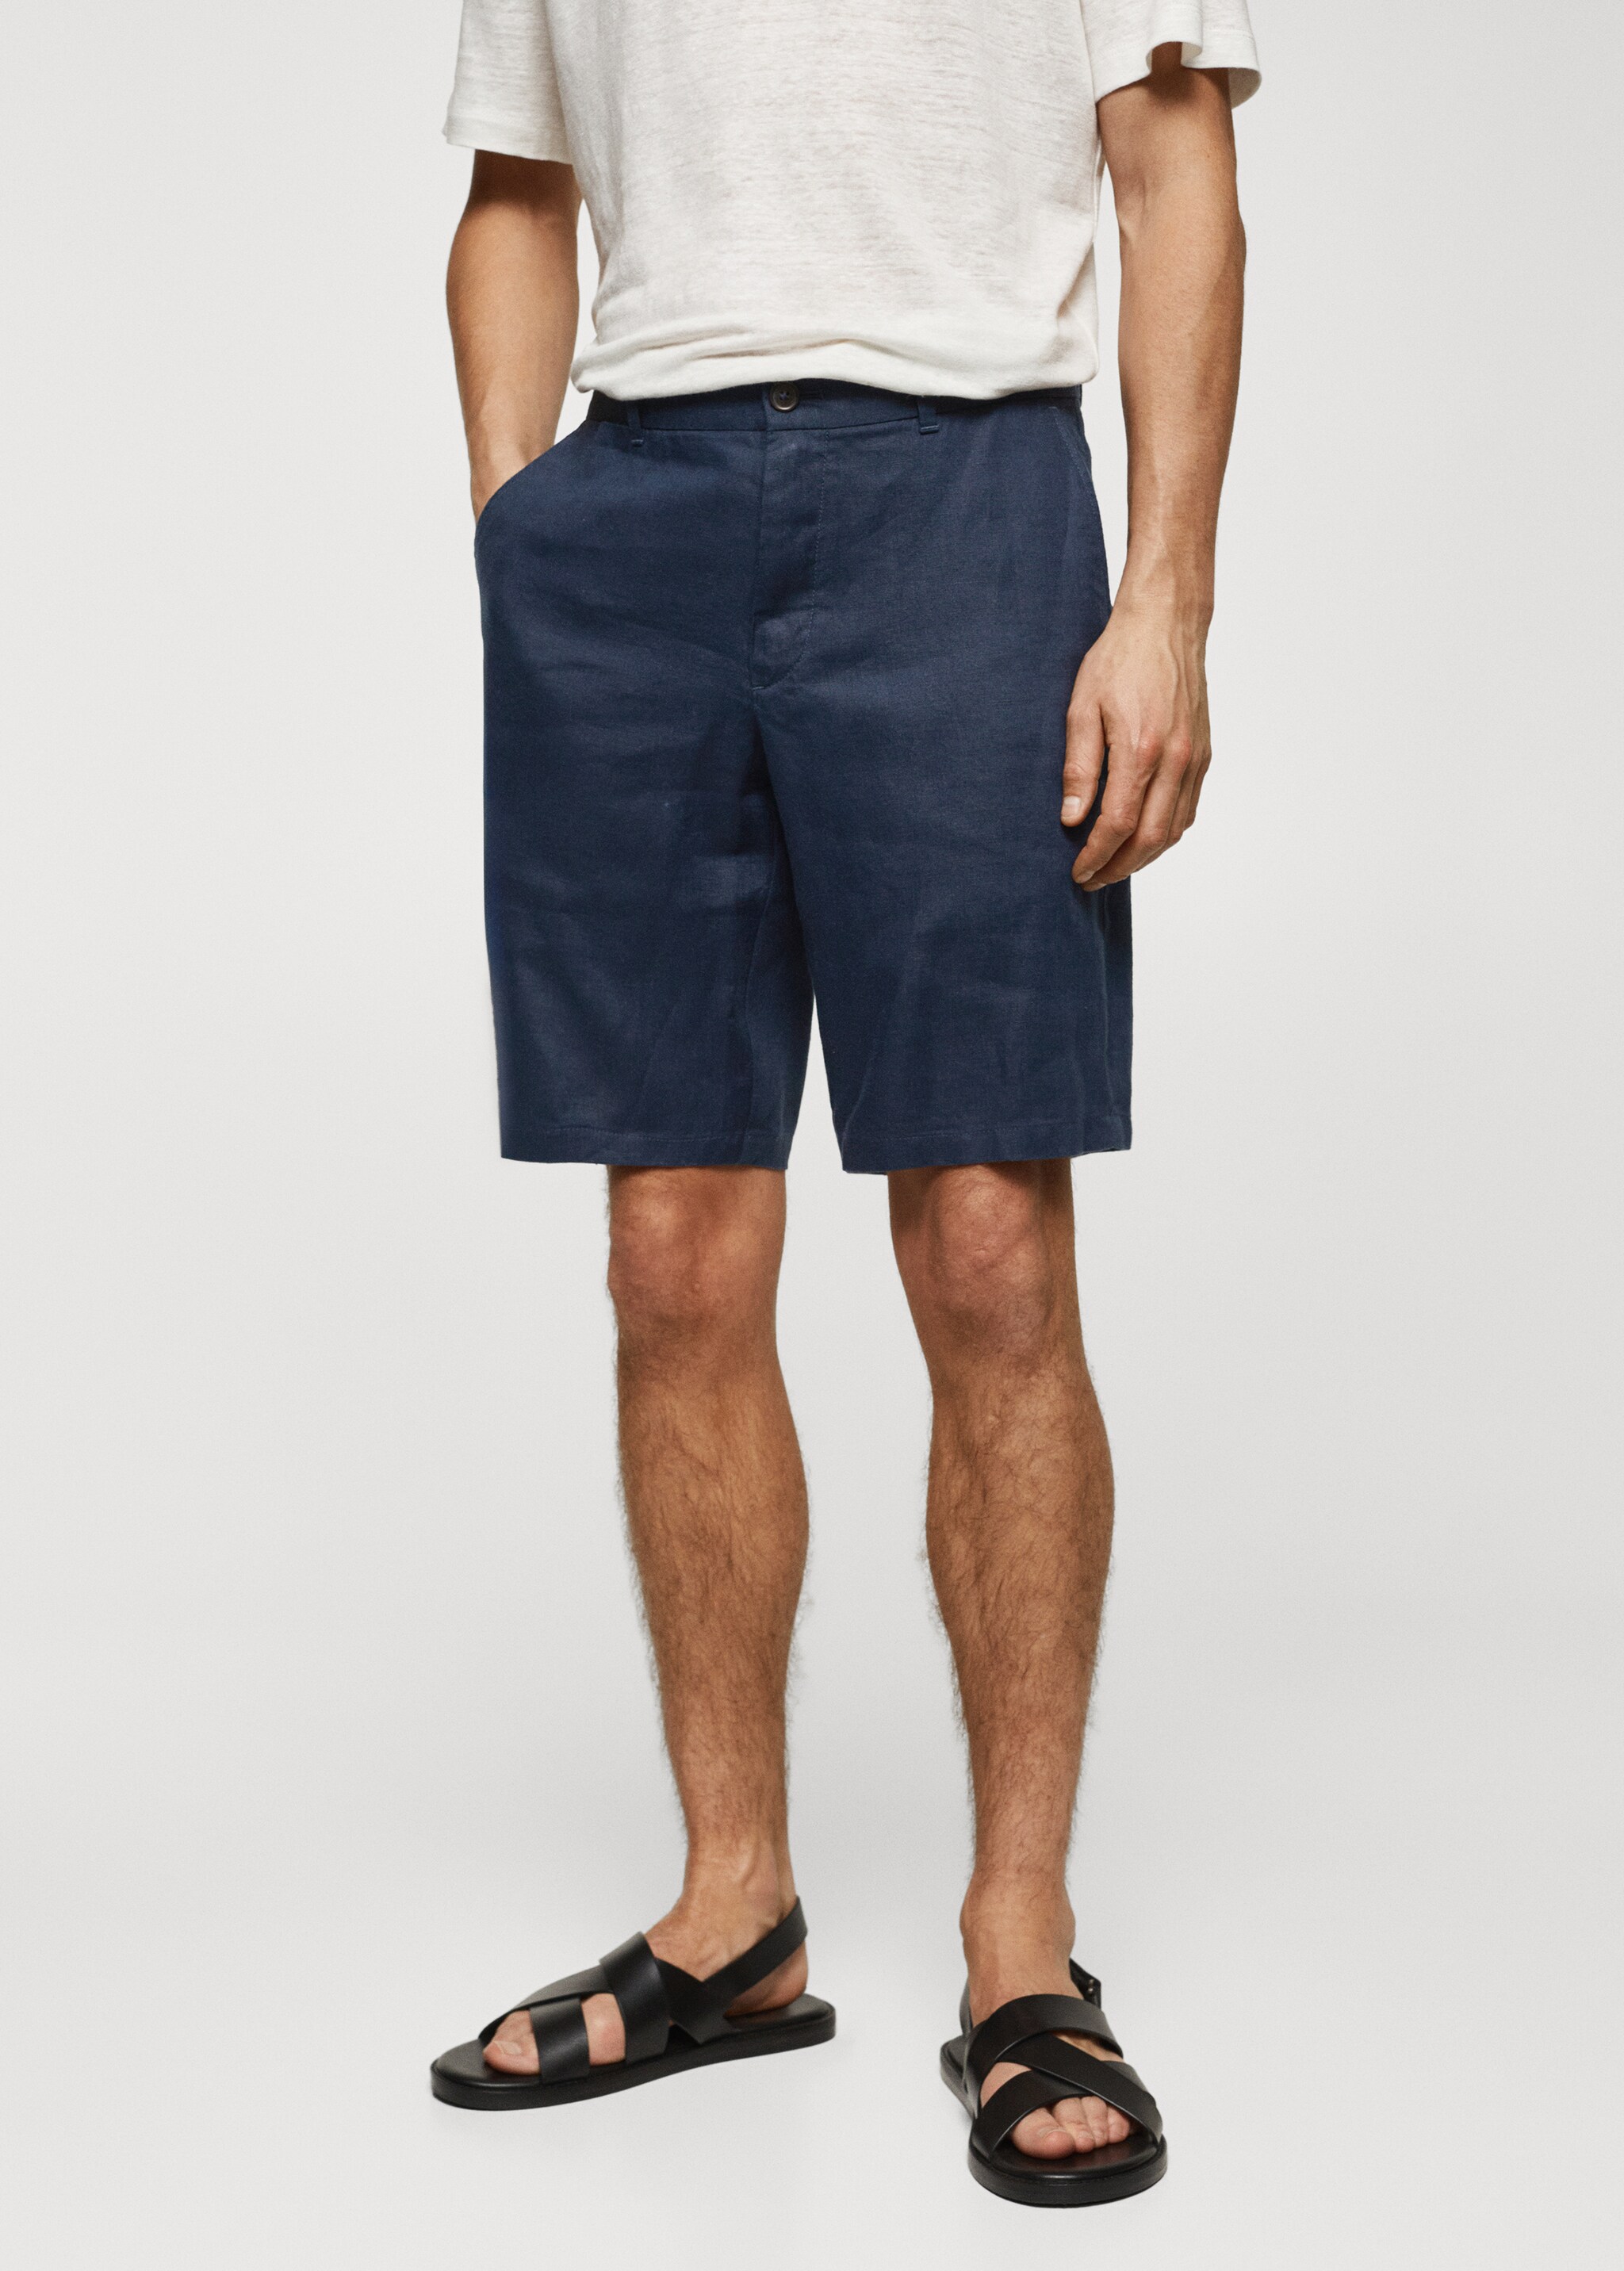 100% linen shorts - Medium plane